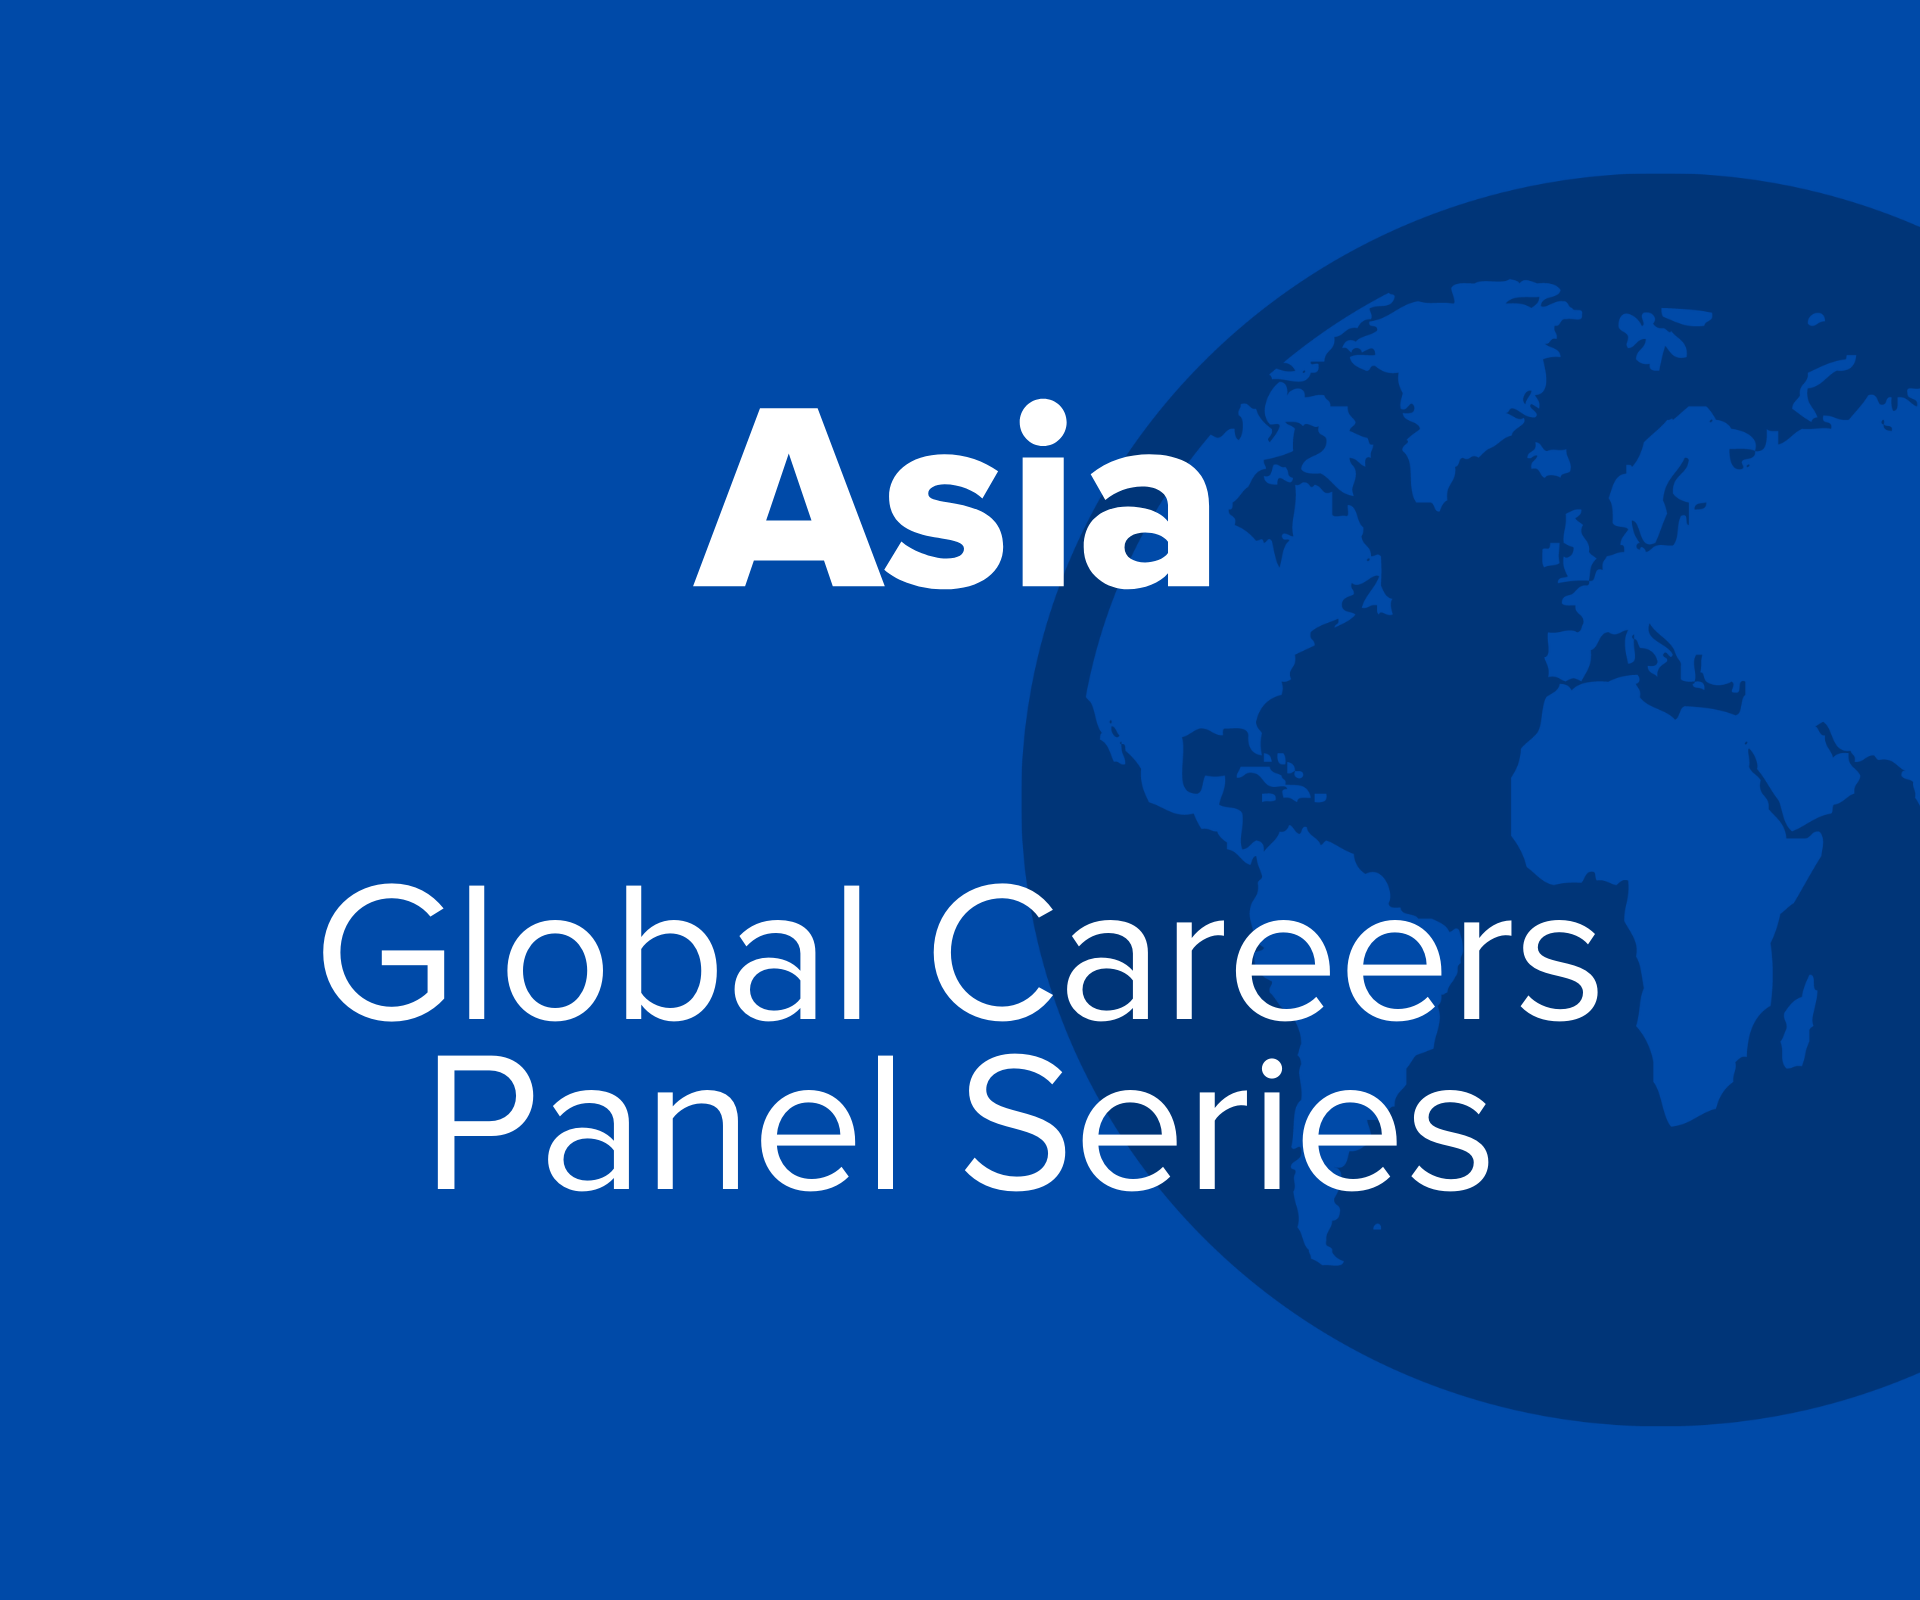 Asia Global Careers Panel Series